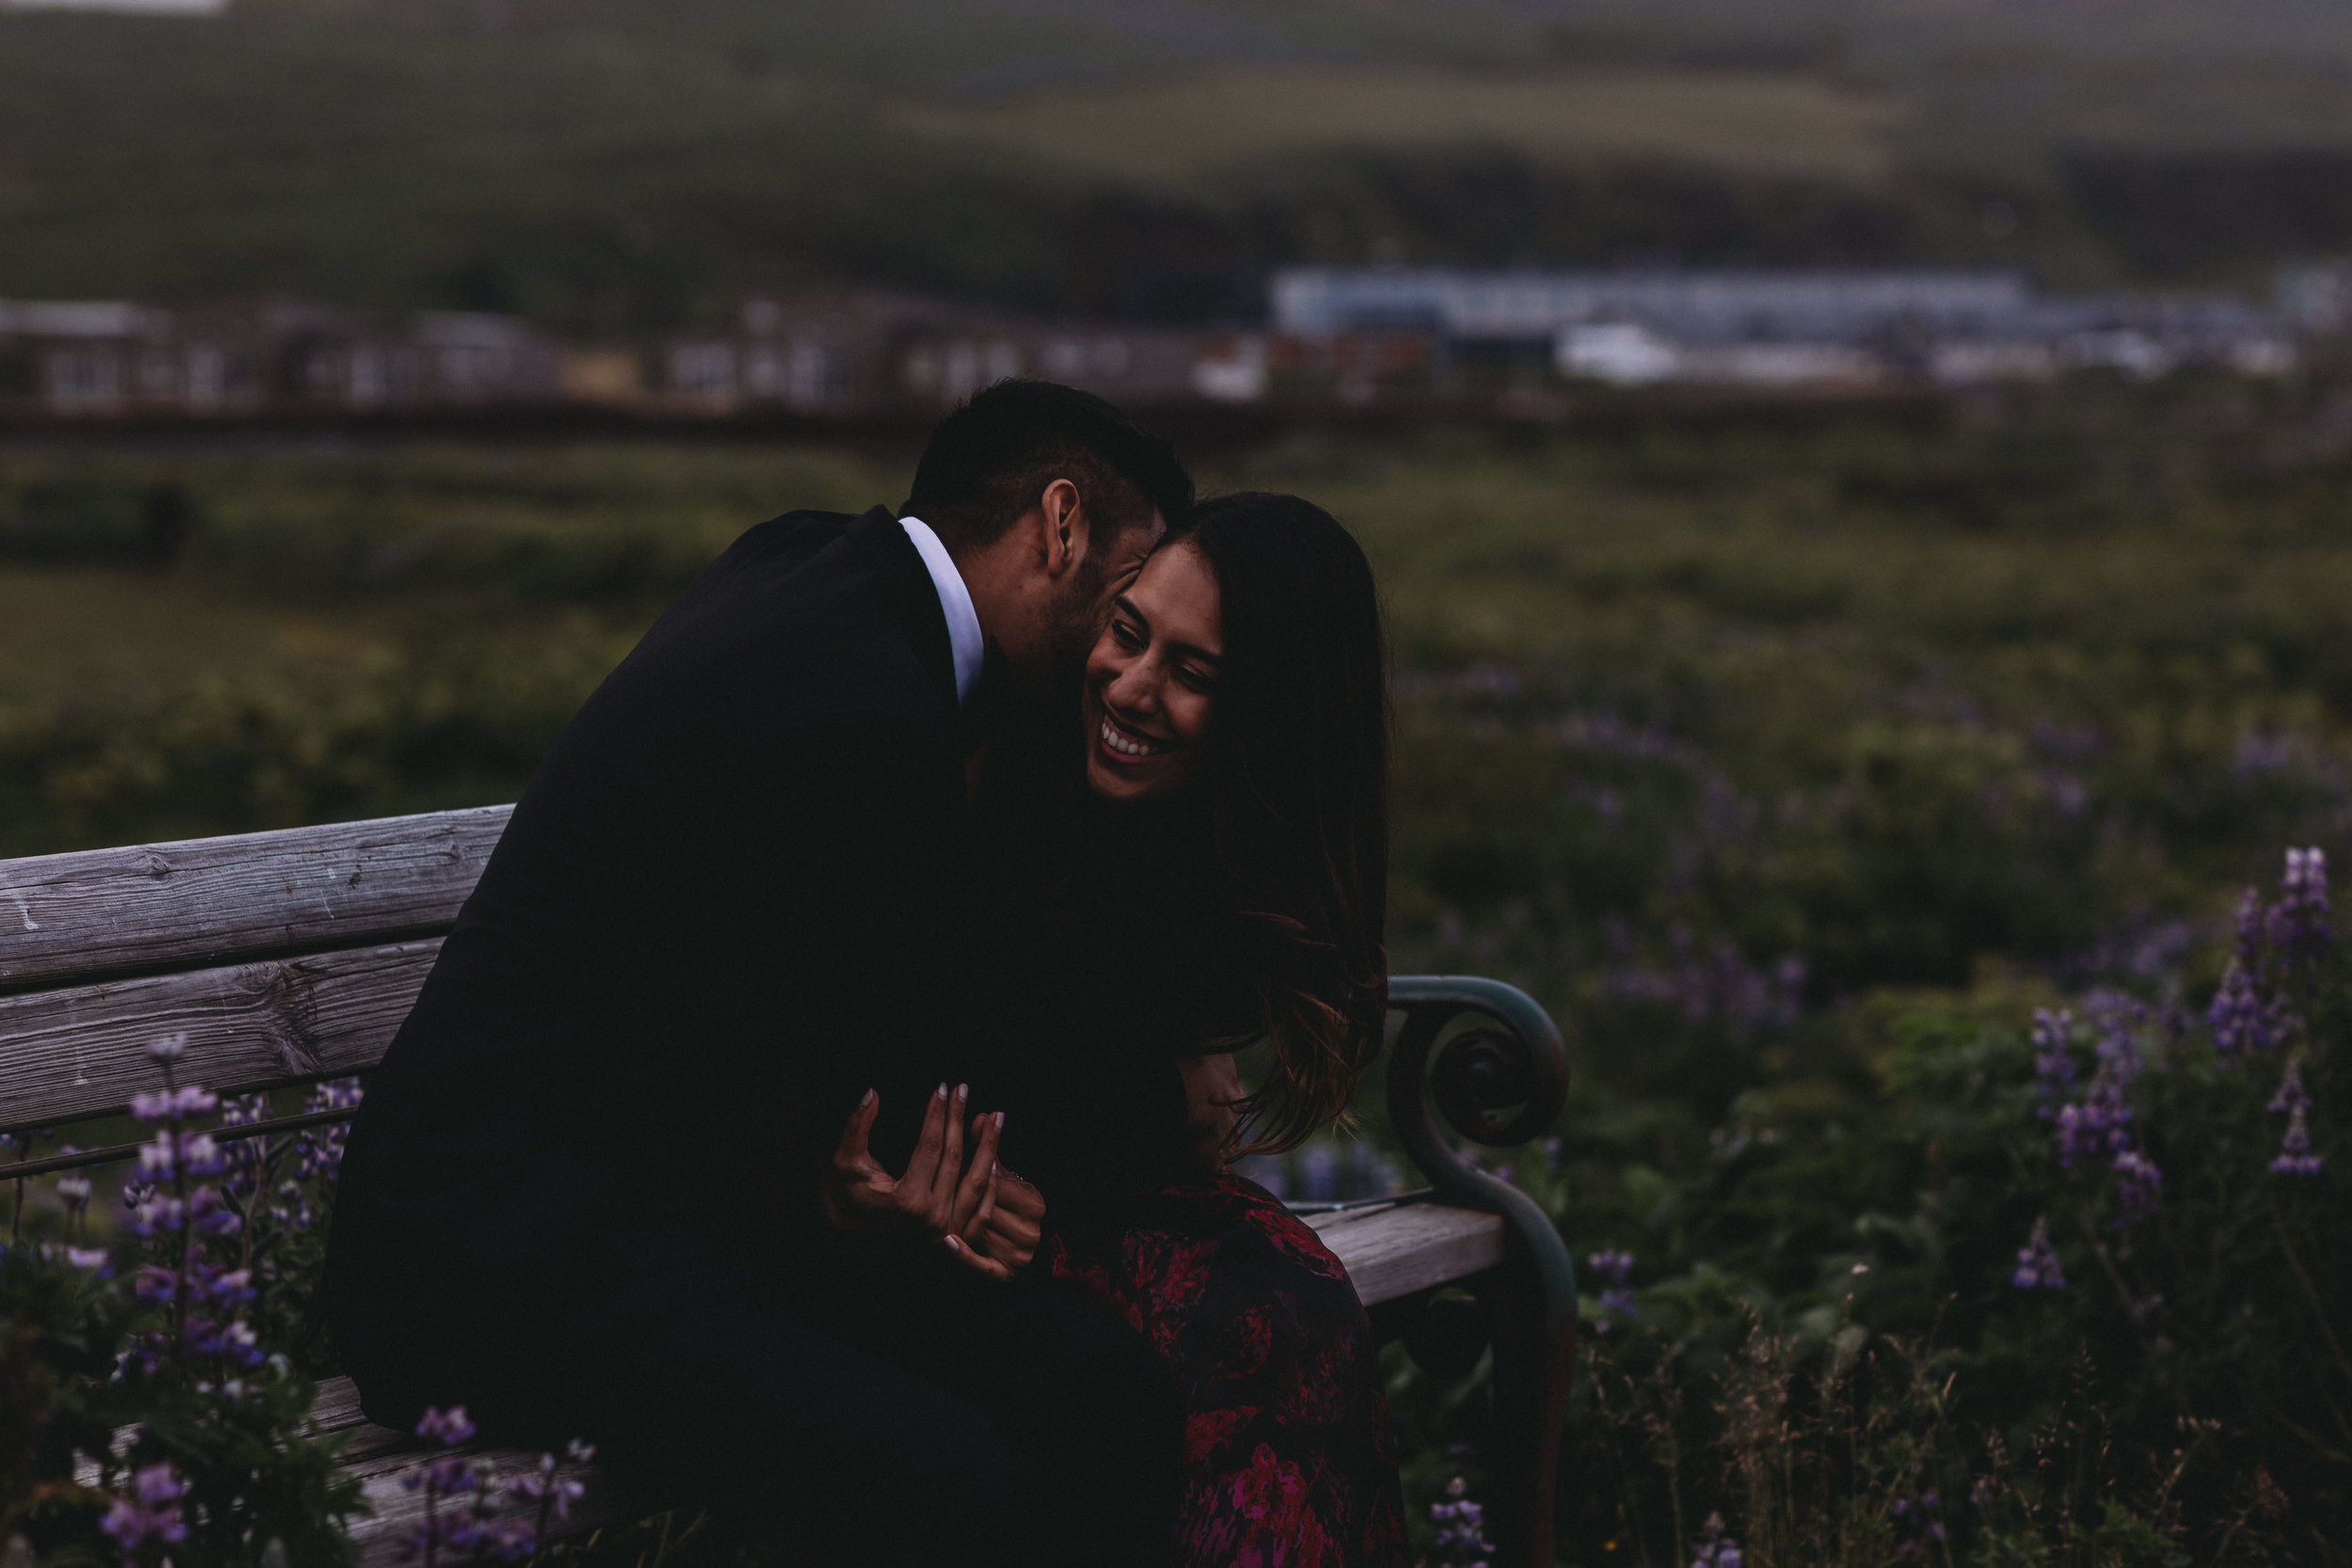 Iceland elopement photographer | Iceland south coast engagement photos | Iceland Skogafoss wedding pictures